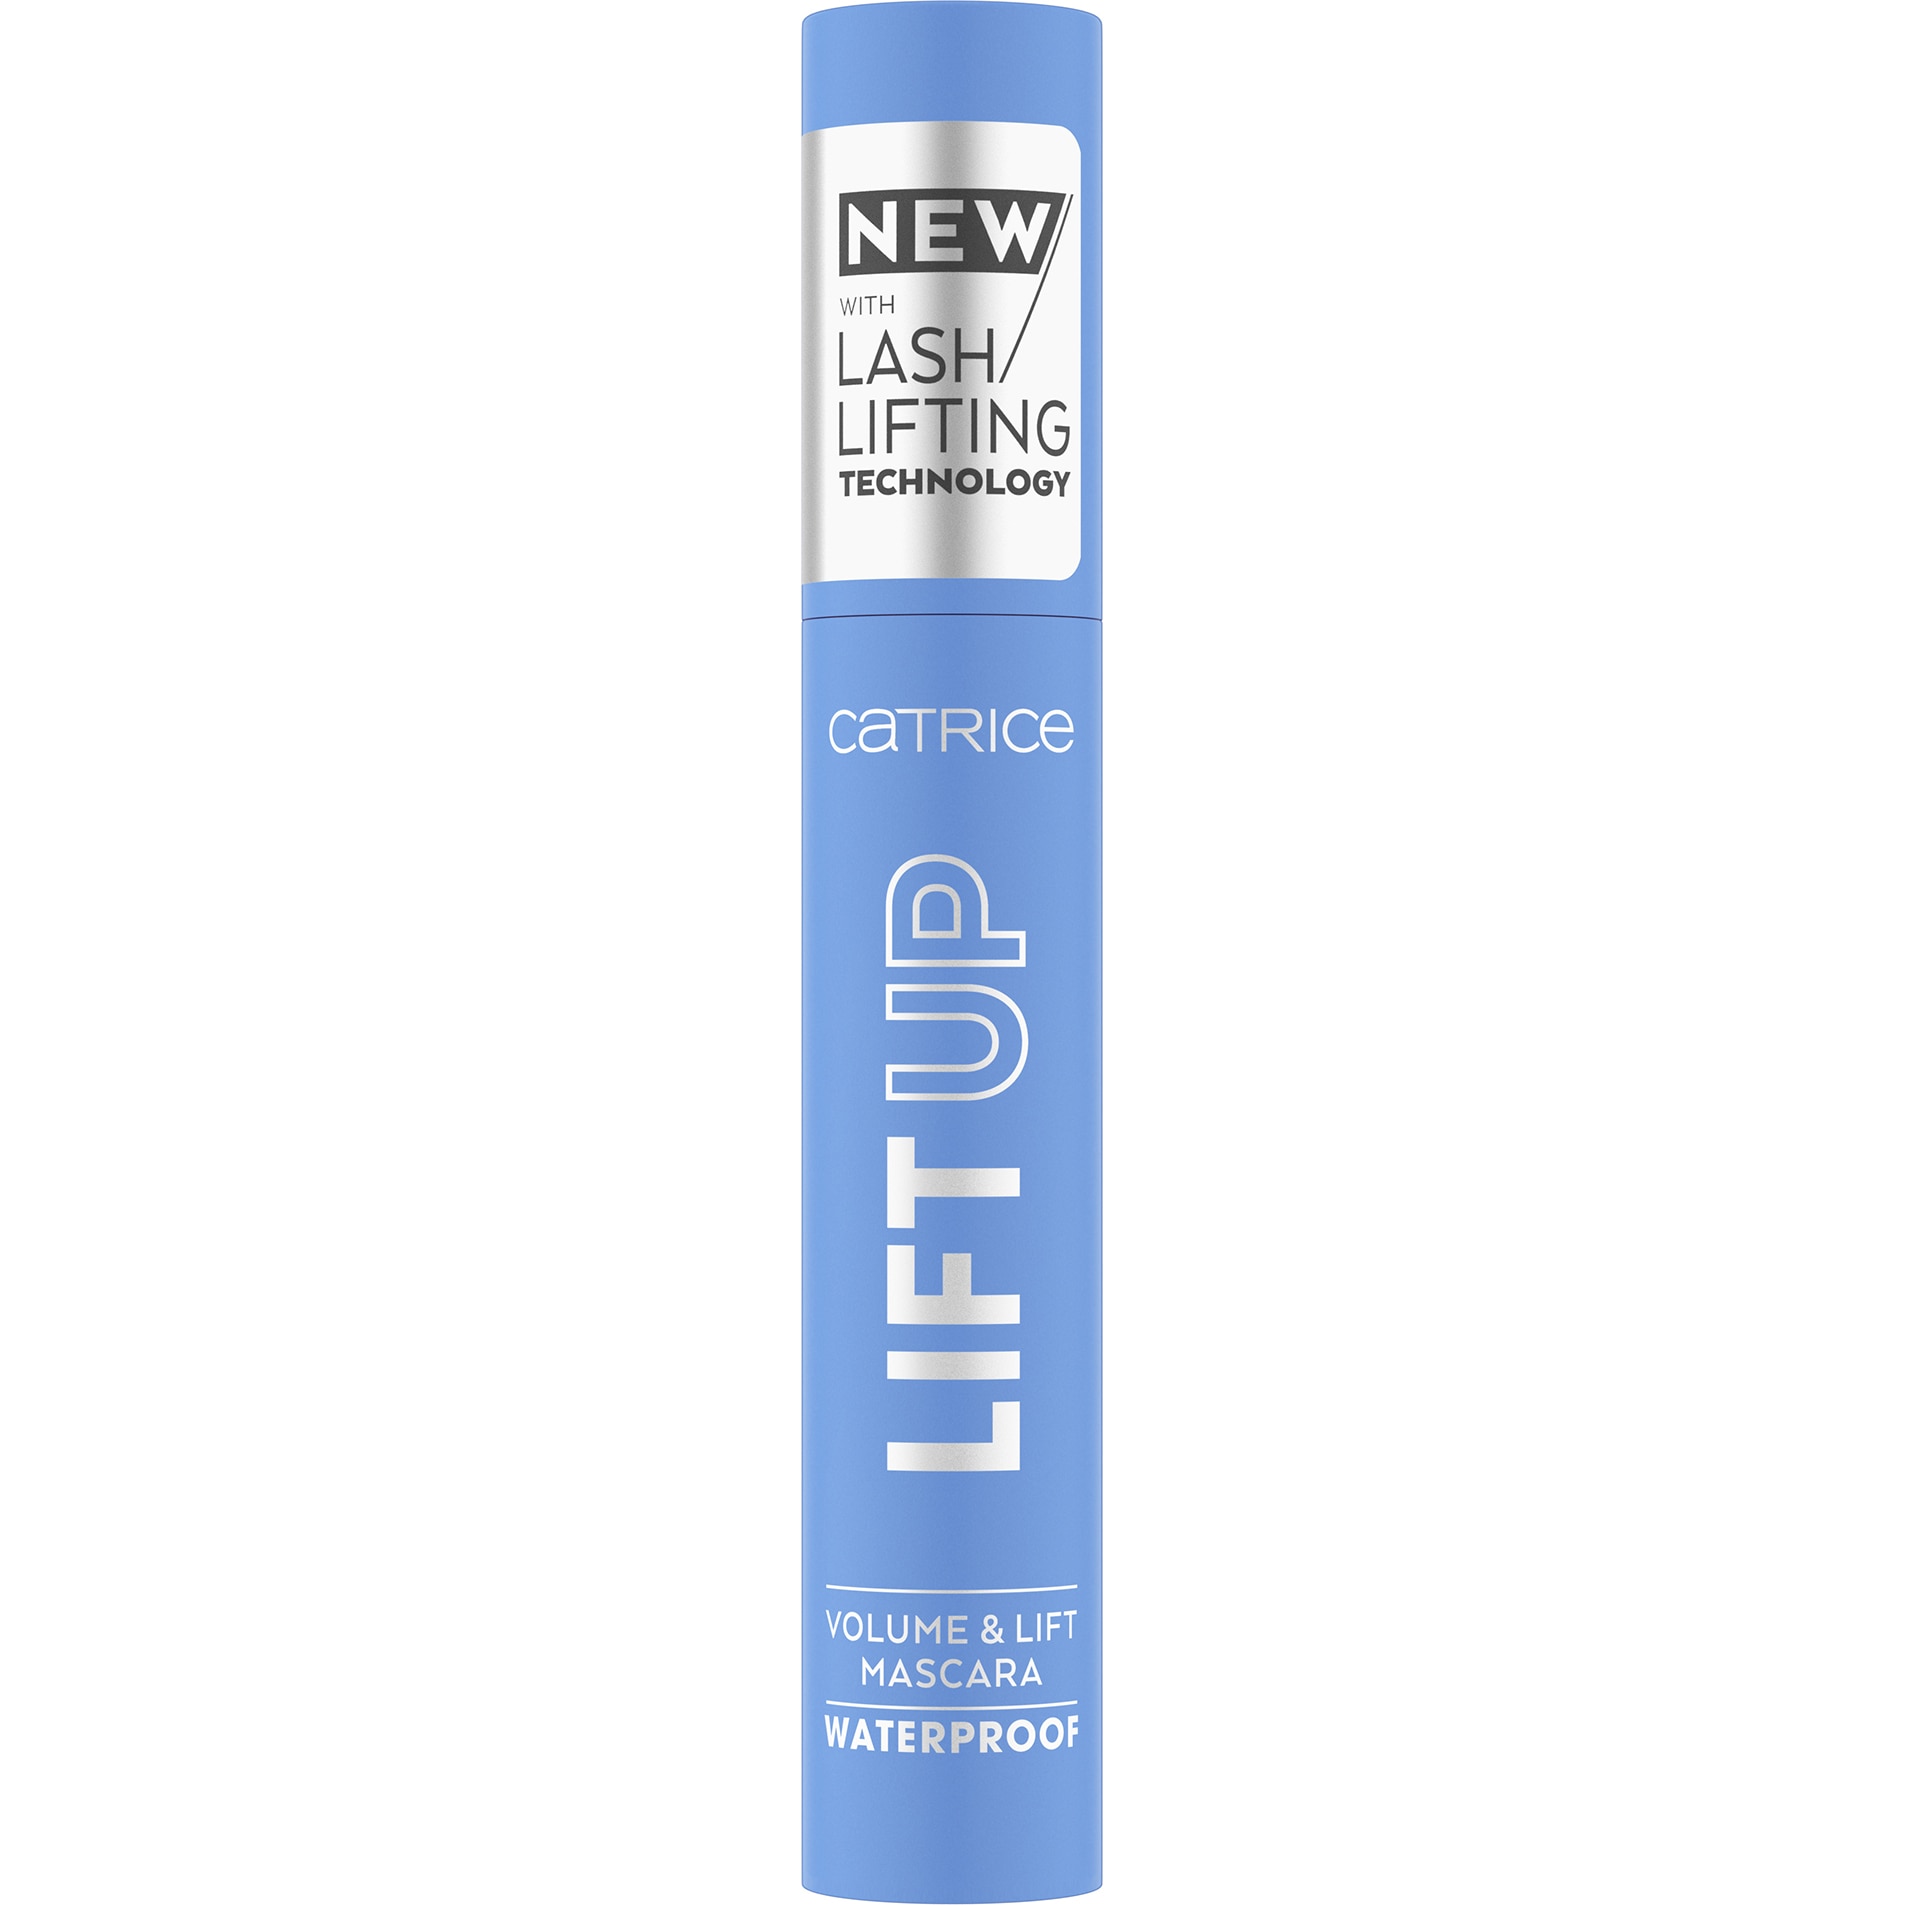 Mascara Catrice pentru volum UP ml rezistenta ridicare Lift la Volume apa LIFT 11 si Black, Deep & 010